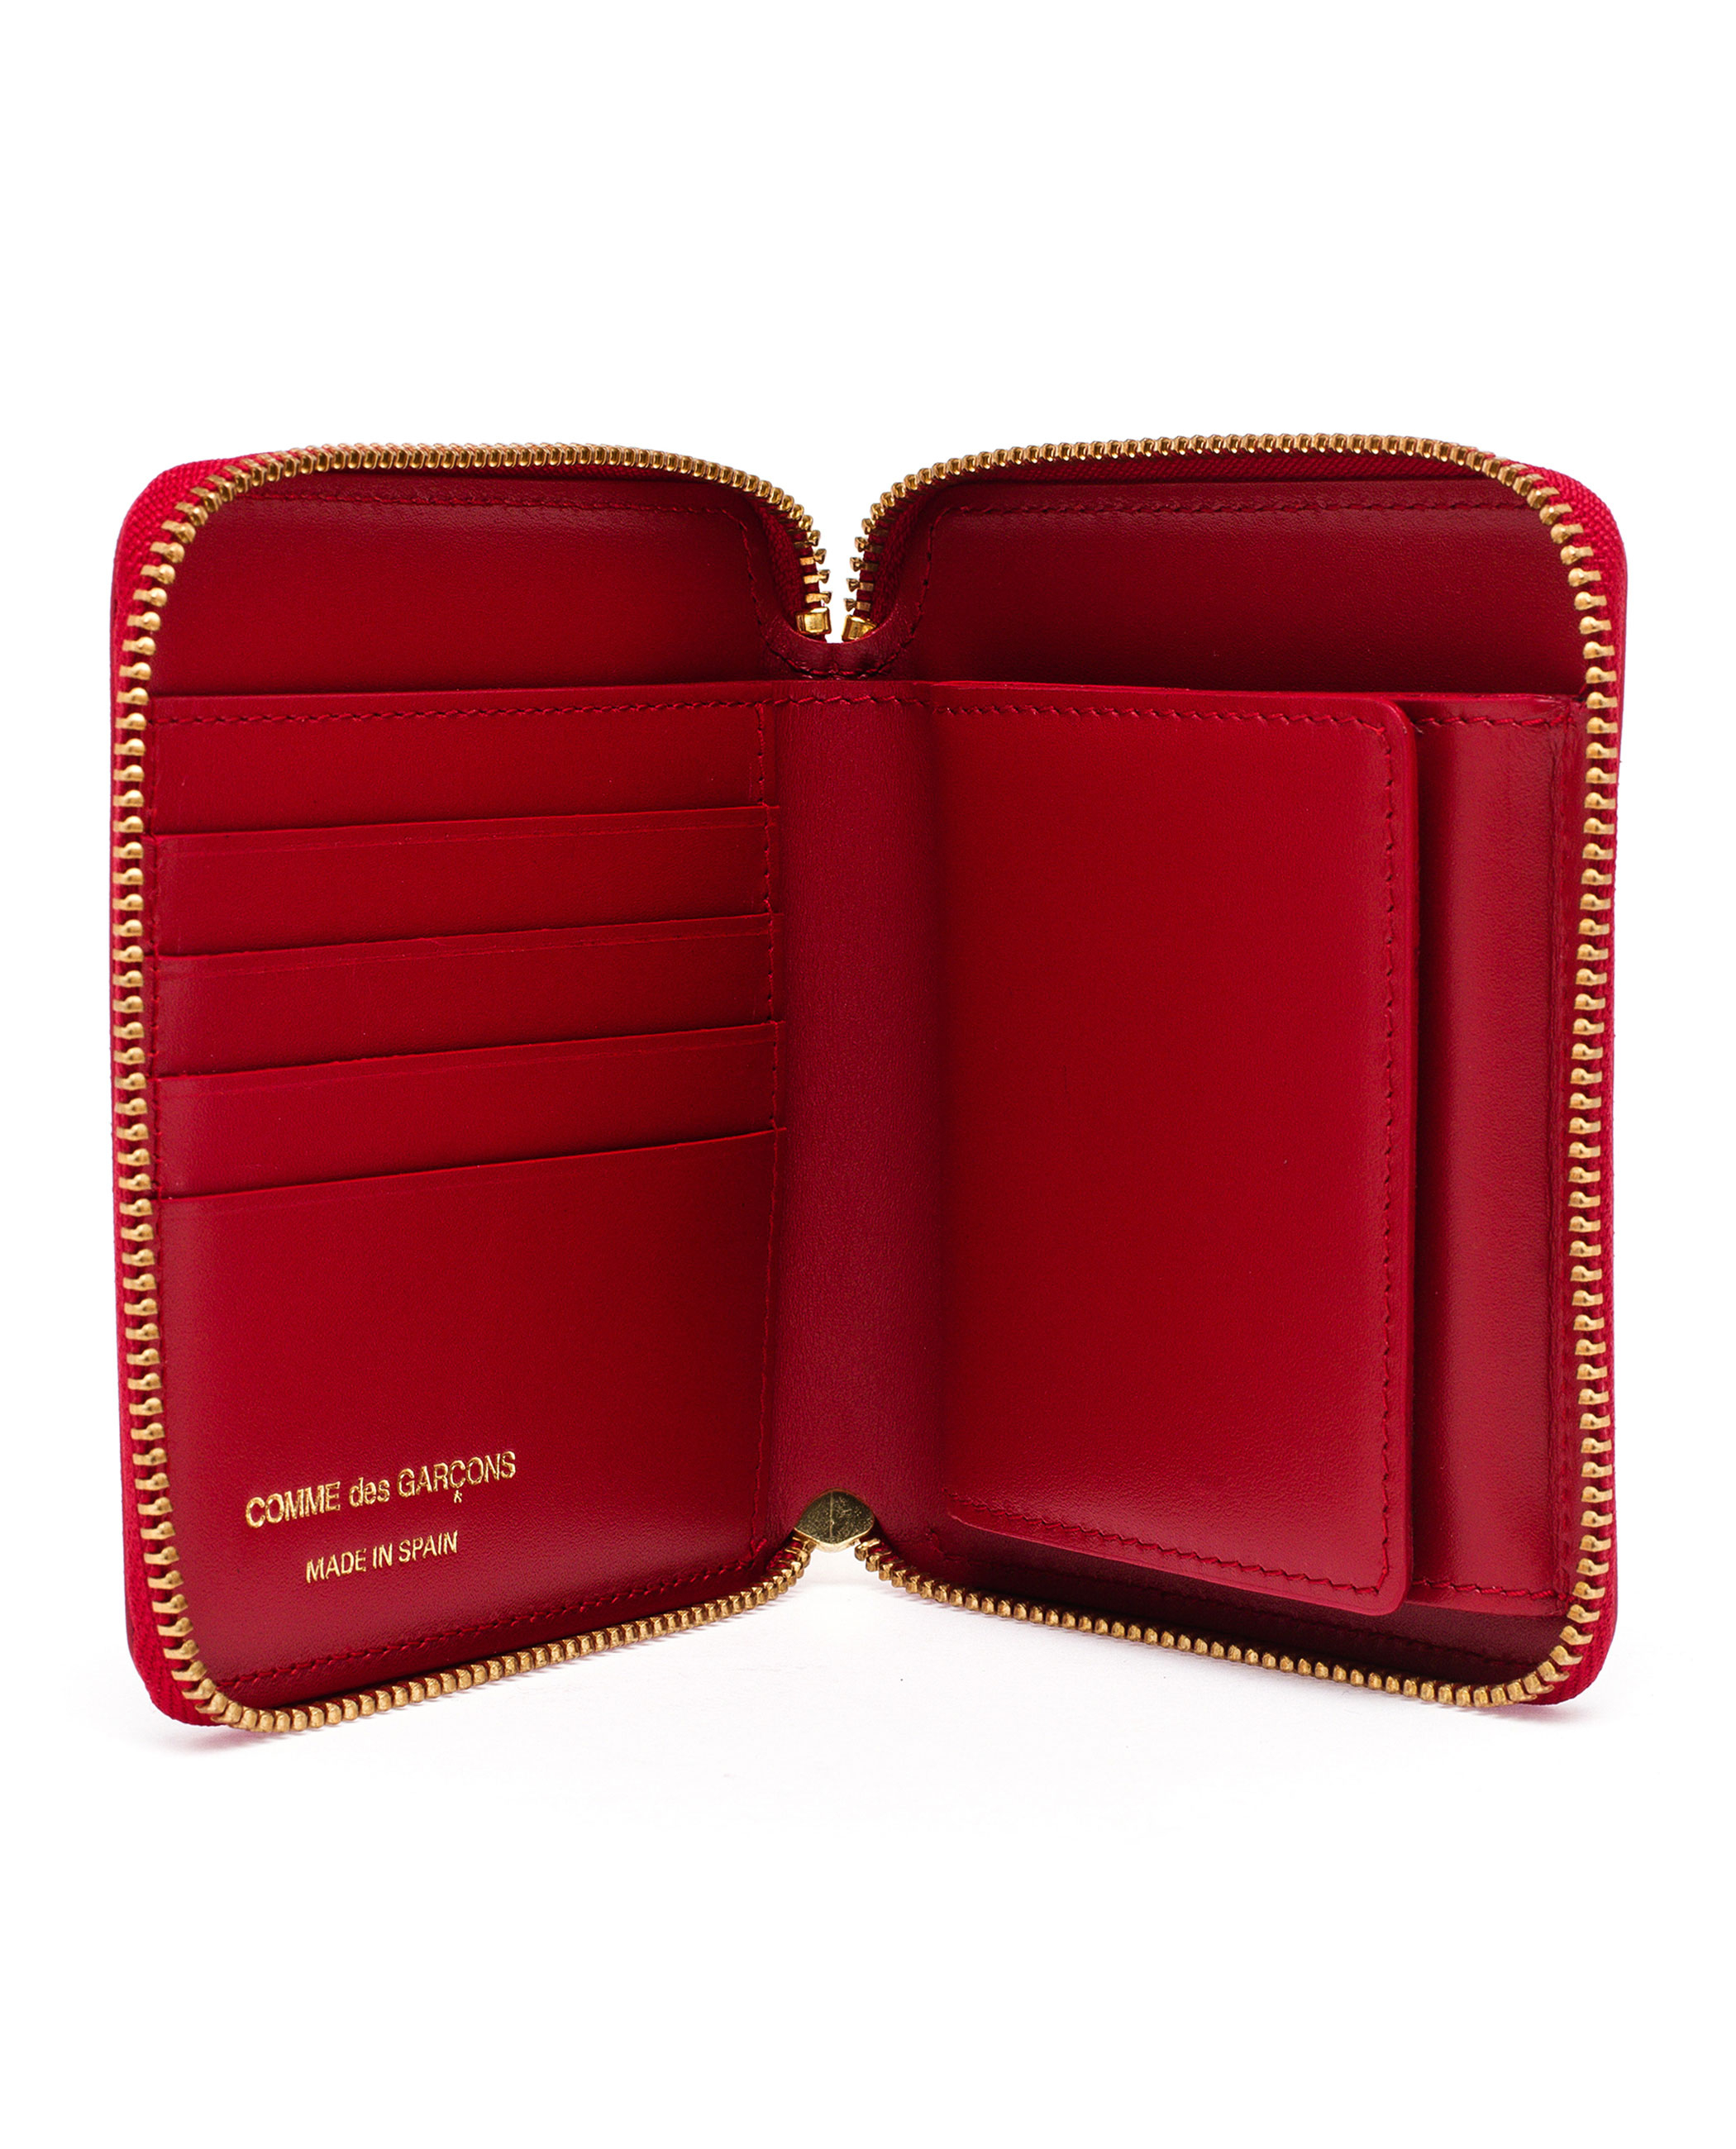 Lyst - Comme Des Garçons Leather Zip Wallet in Red for Men